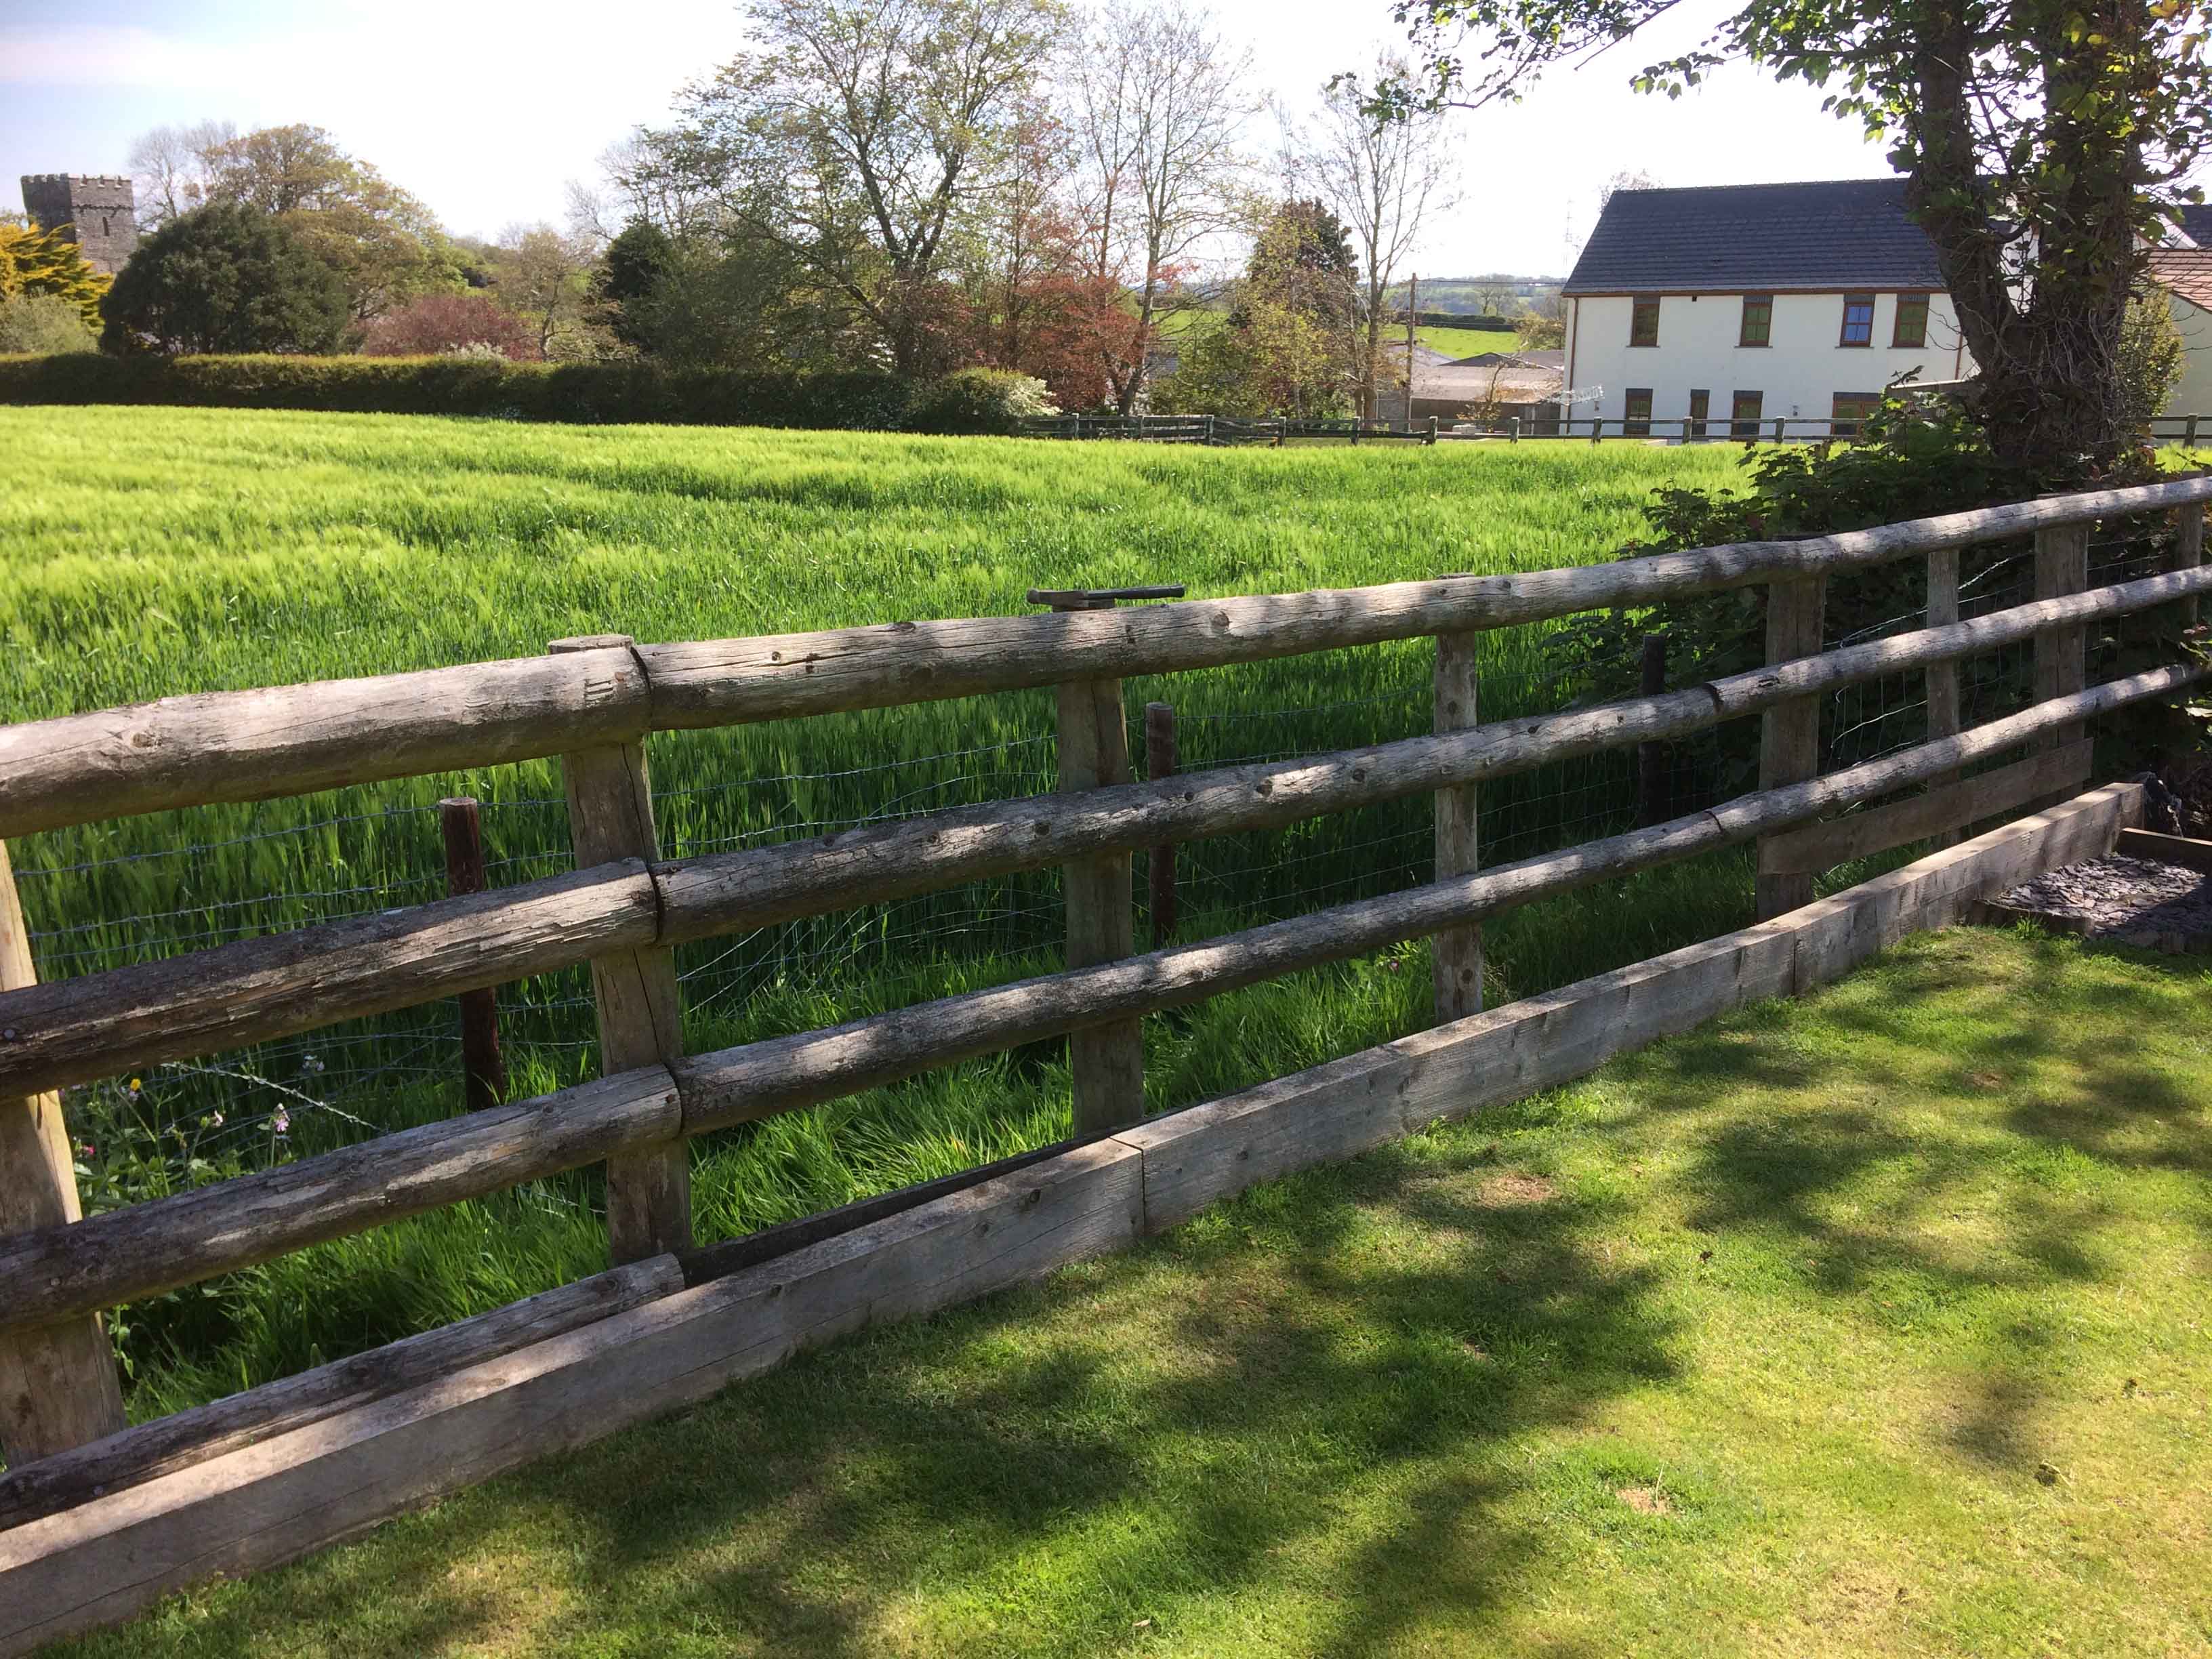 Old agricultural fencing